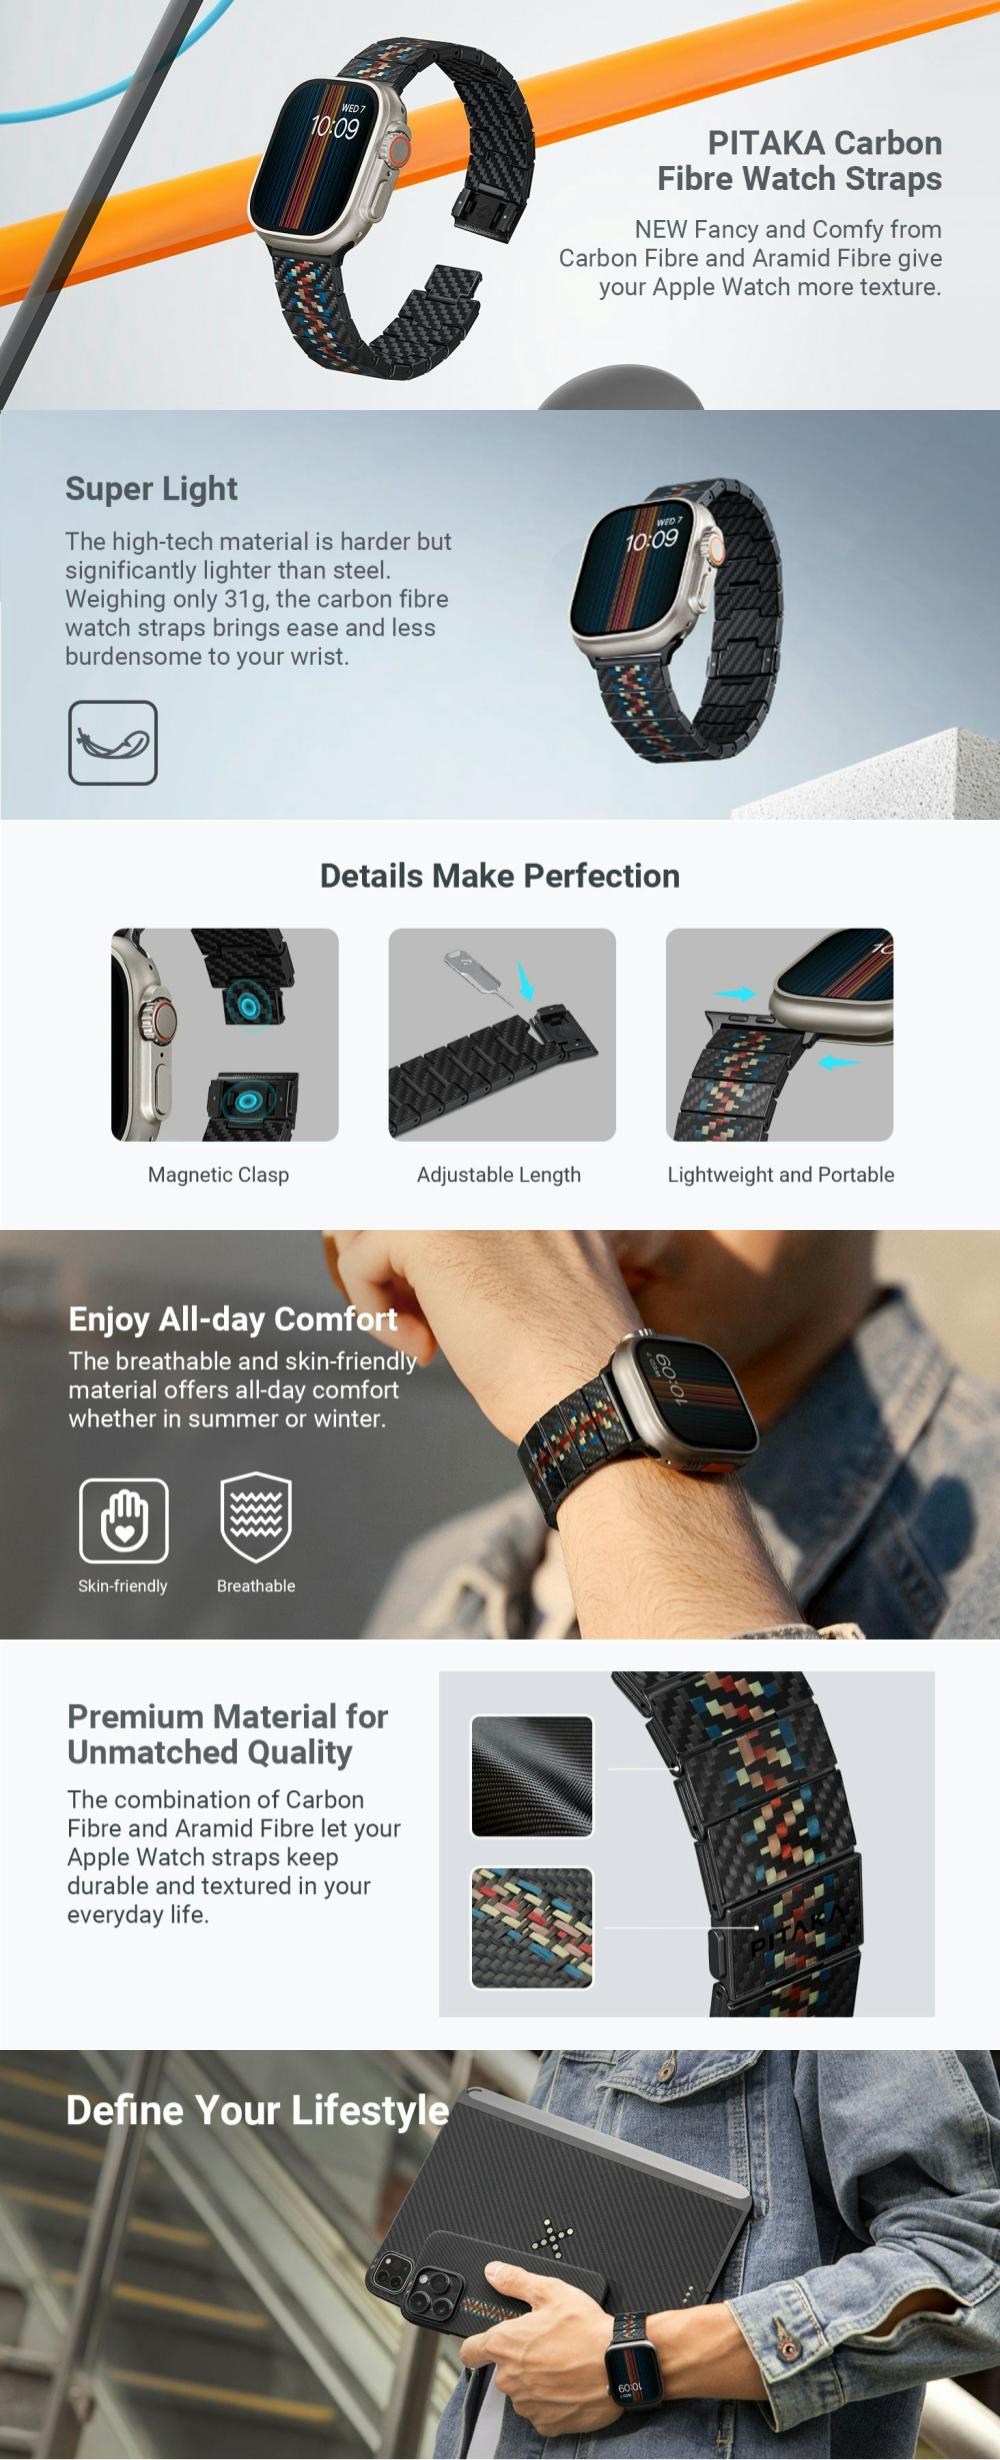 Curea Carbon Fiber Watch Band Pitaka pentru Apple Watch, Rhapsody